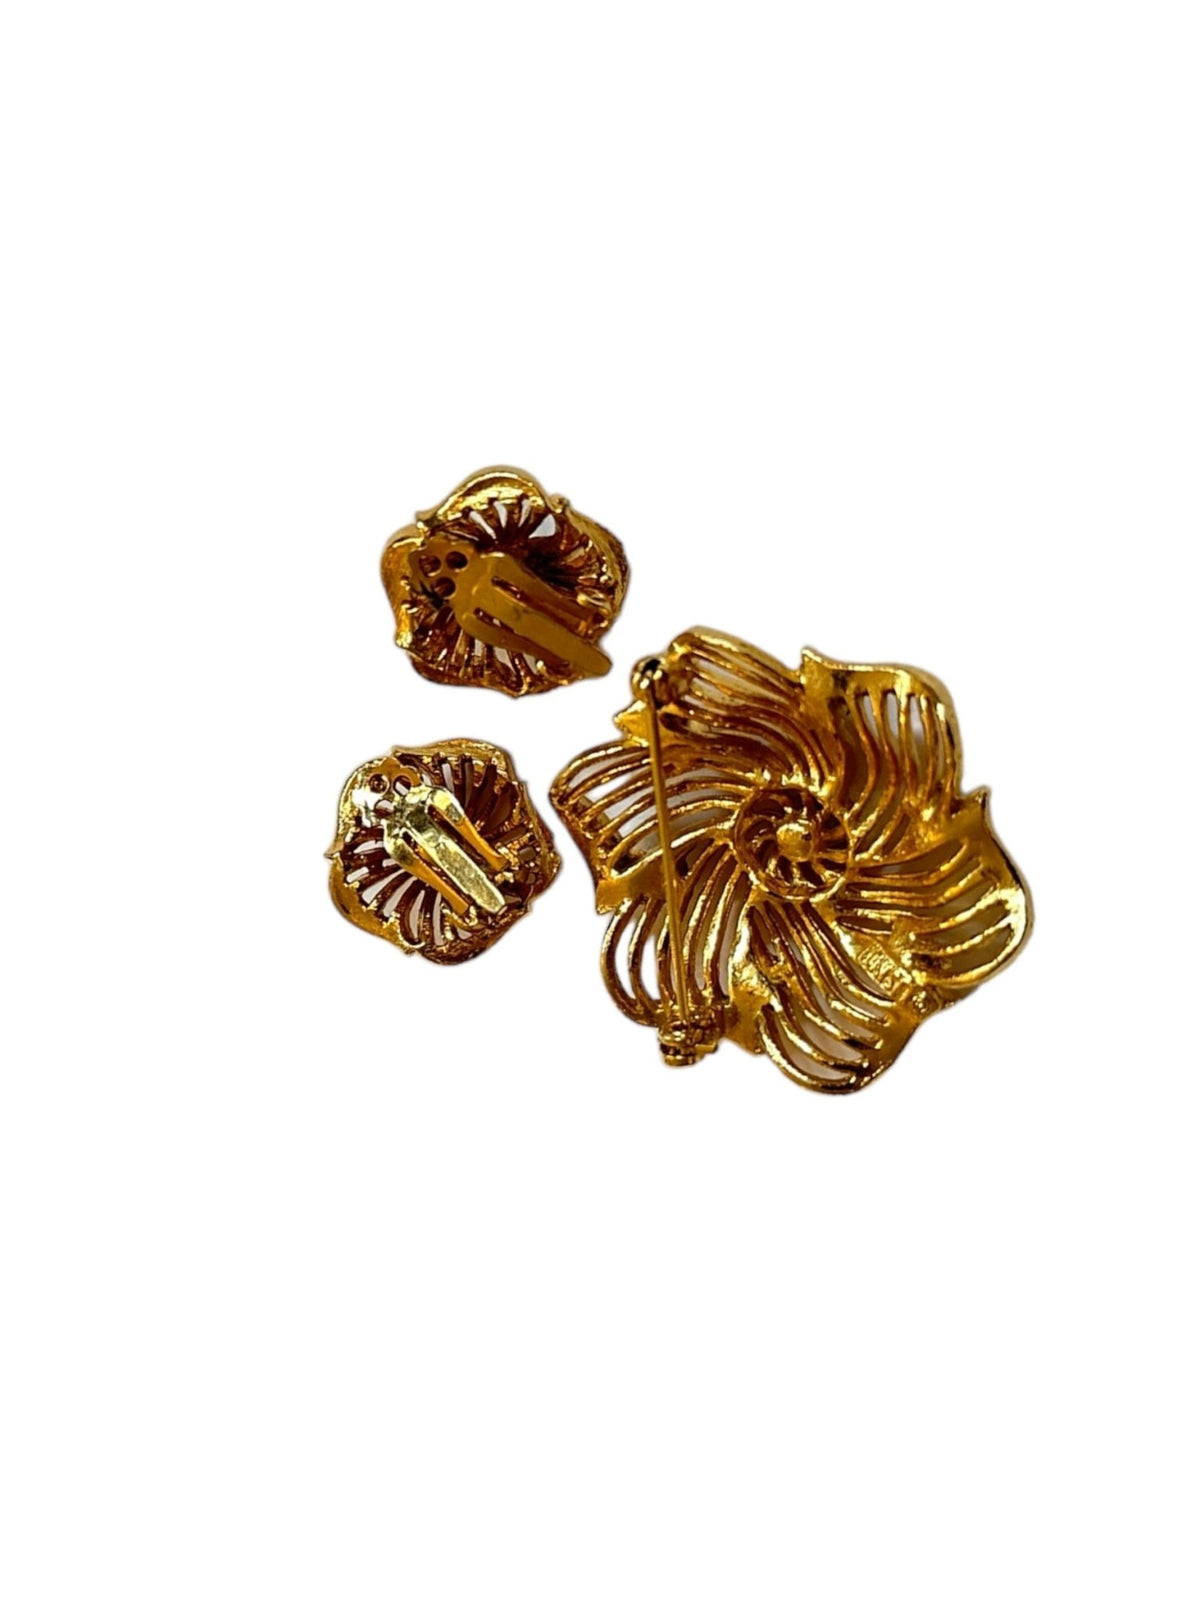 Lisner Vintage Jewelry Gold Floral Swirl Rhinestone Jewelry Set - 24 Wishes Vintage Jewelry